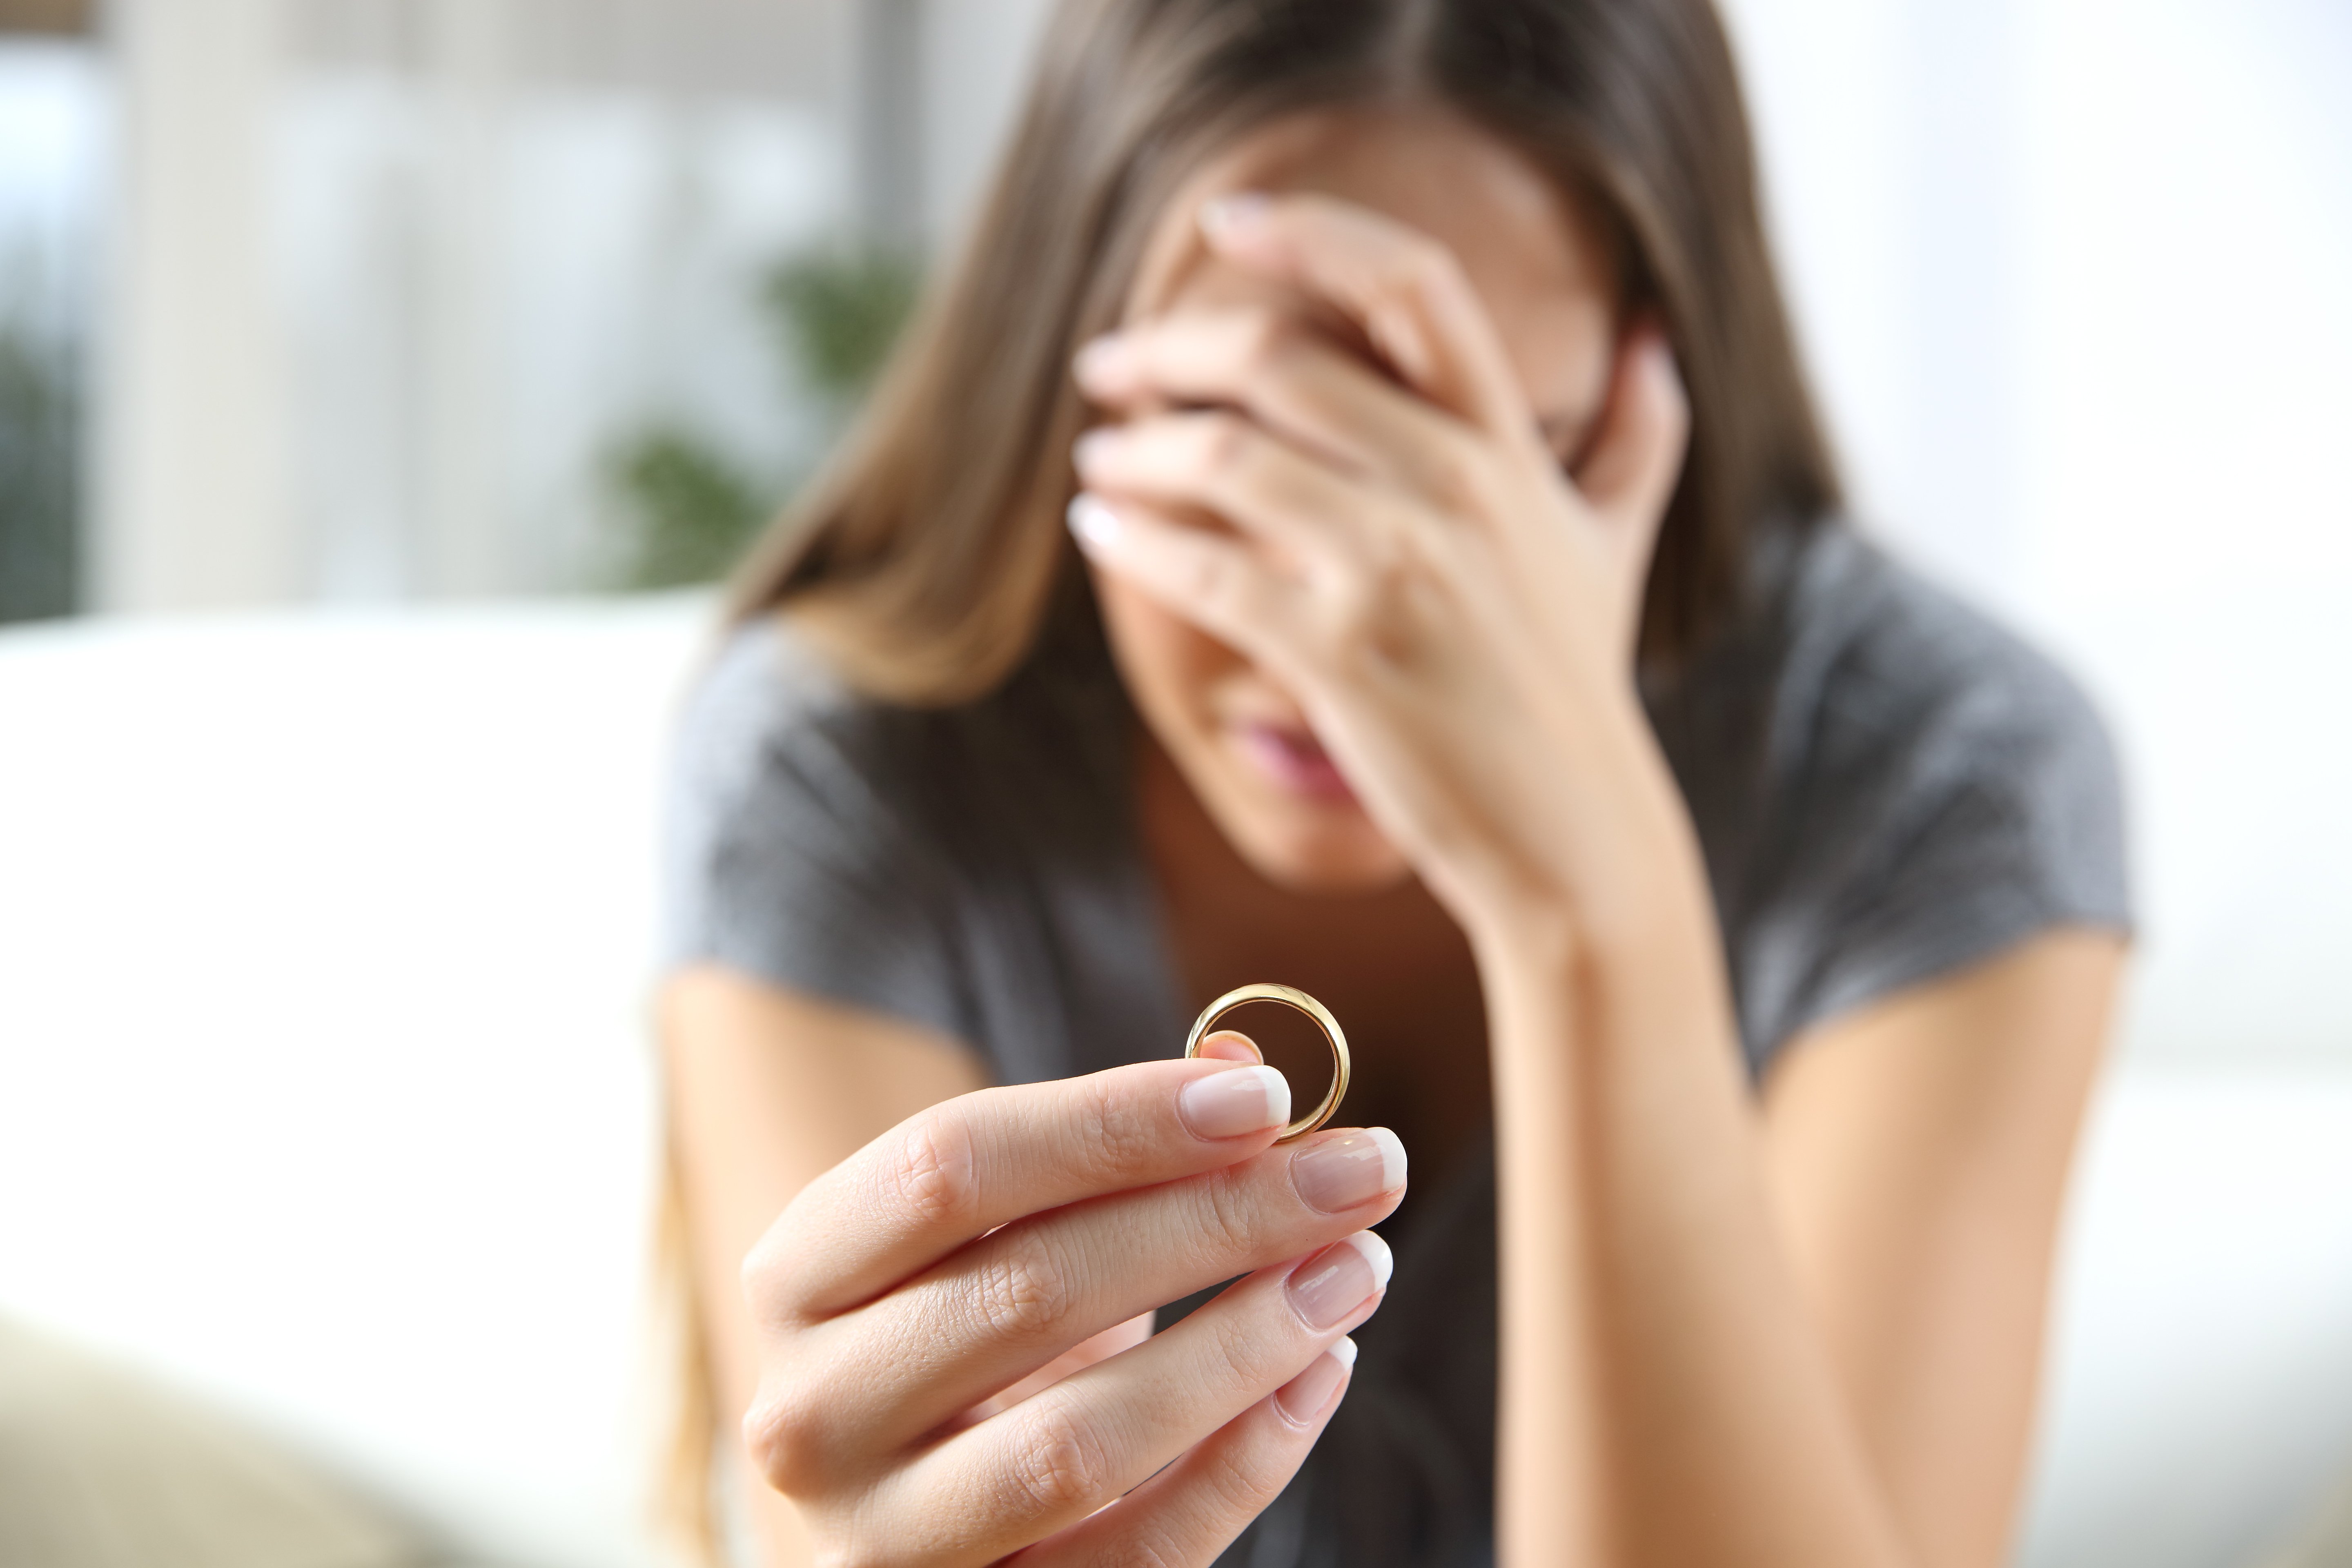 Mujer con anillo en la mano, llorando. | Foto: Shutterstock